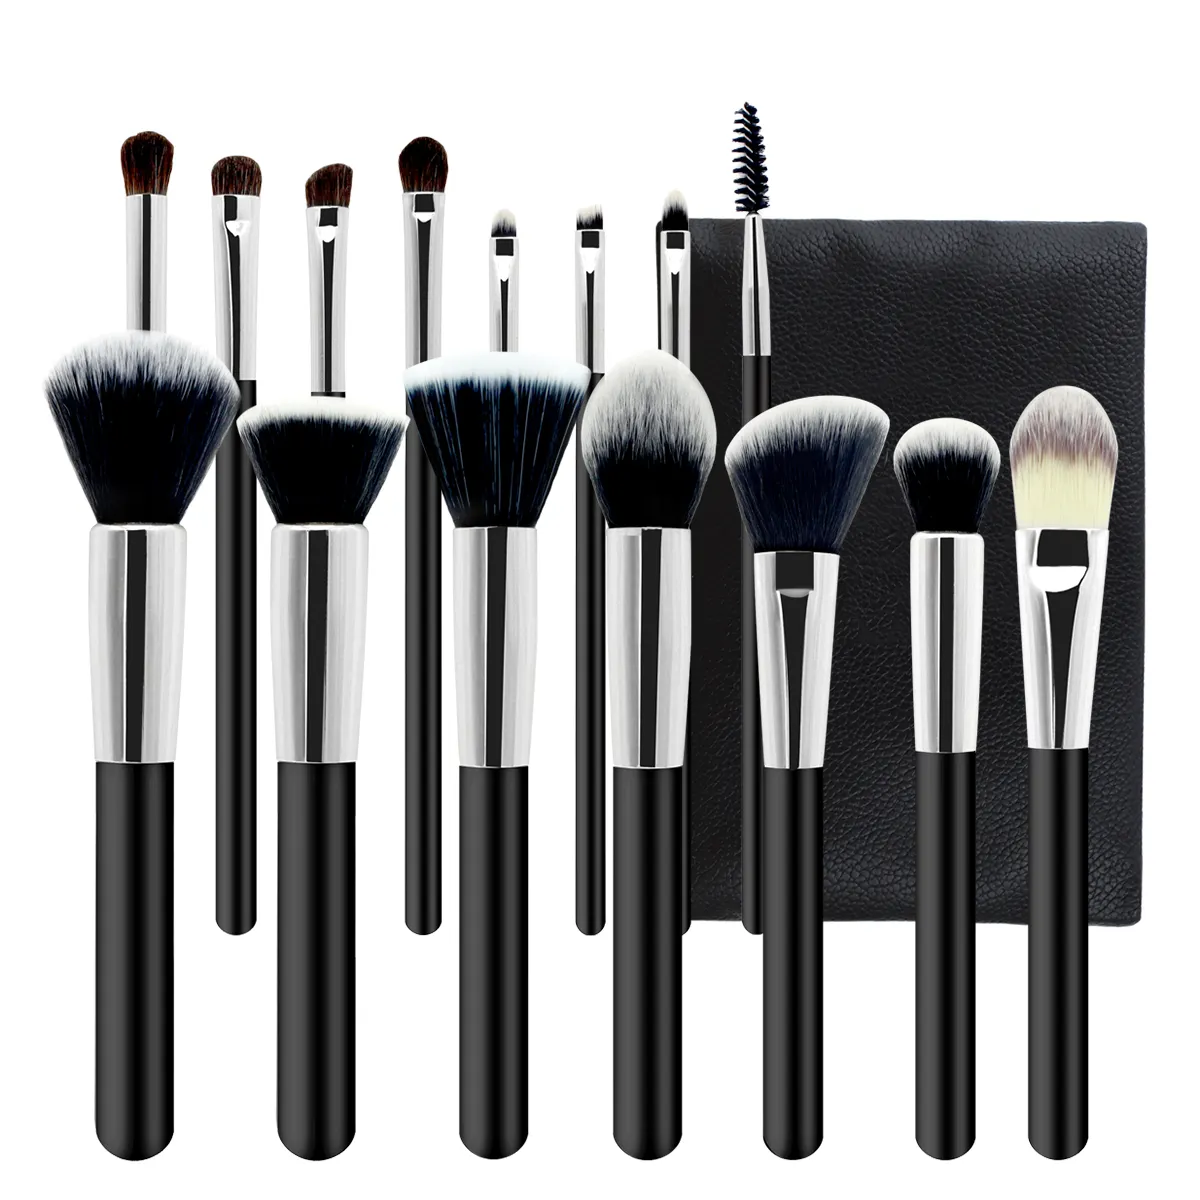 Makeup Brushes New Arrivals Makeup Brushes Professional 15pcs China With Bag